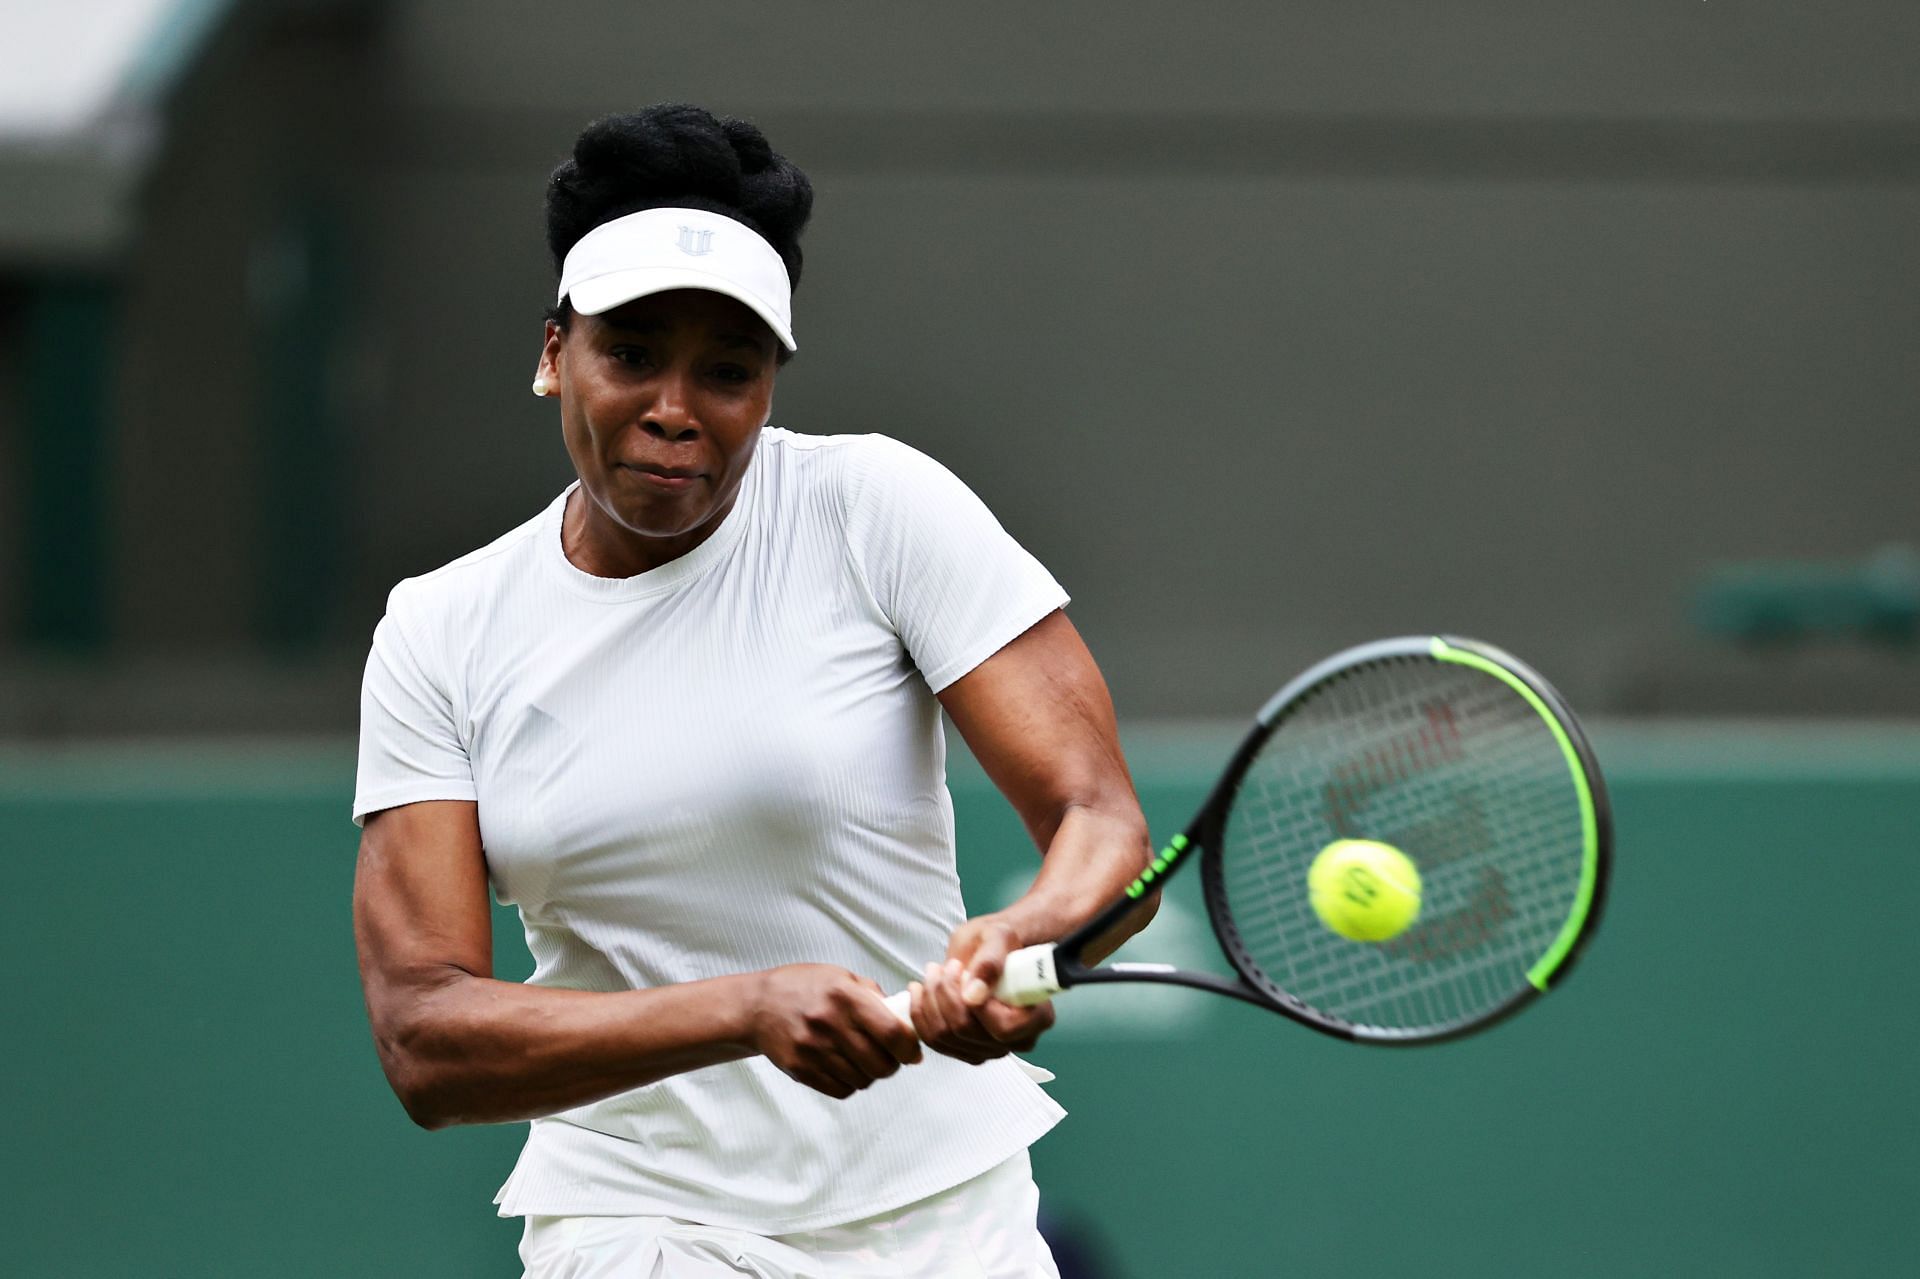 Venus Williams has won a total of 23 Grand Slam titles